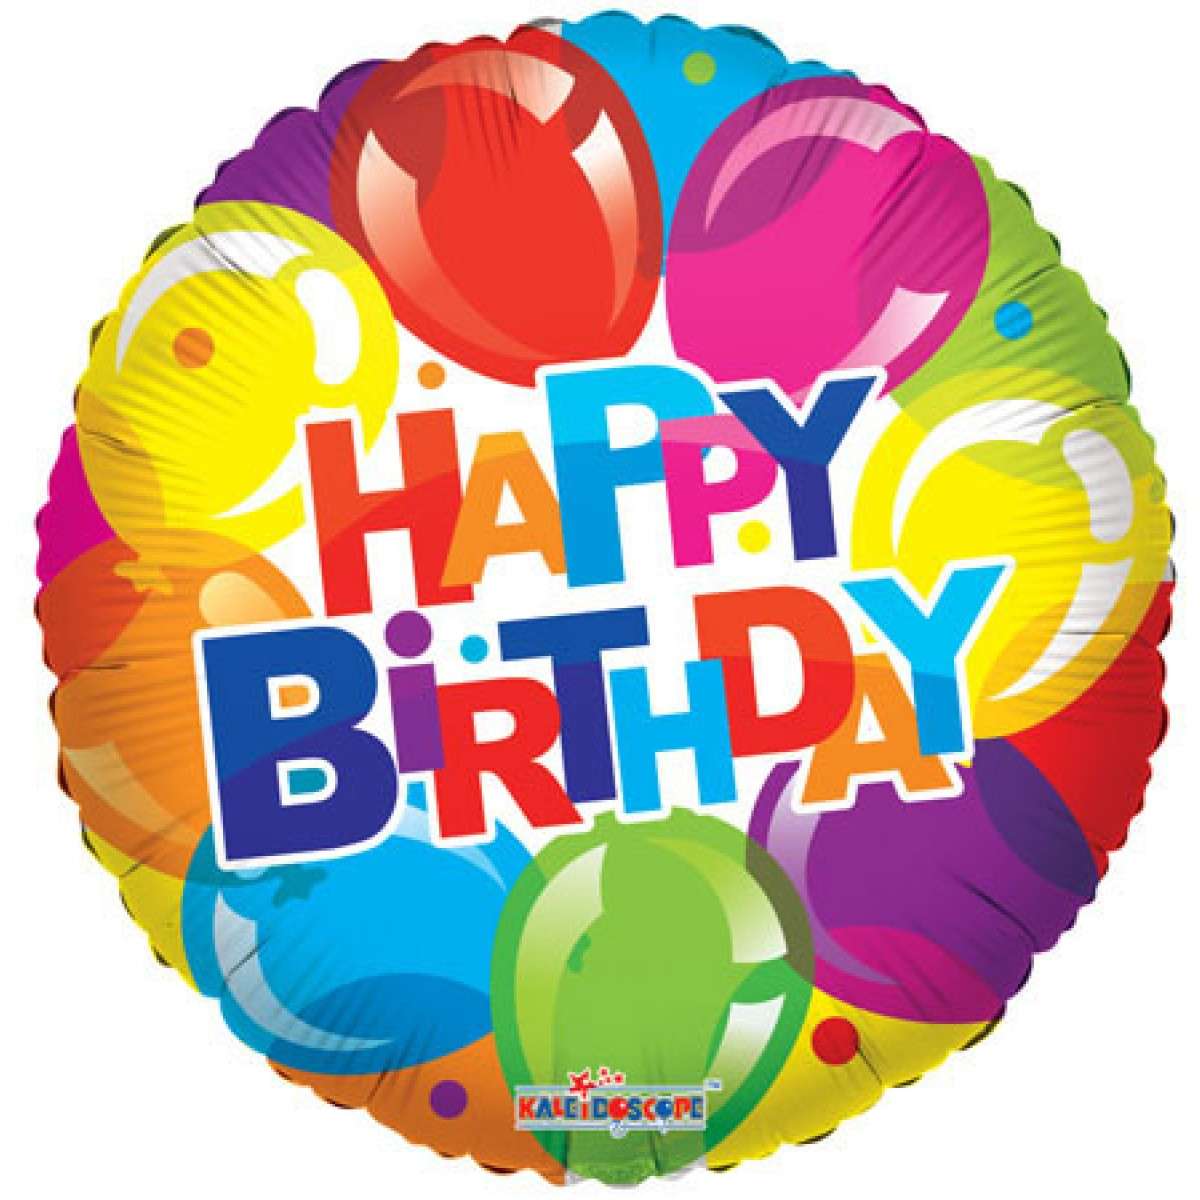 Order Online Single Piece Happy Birthday Balloon to ...